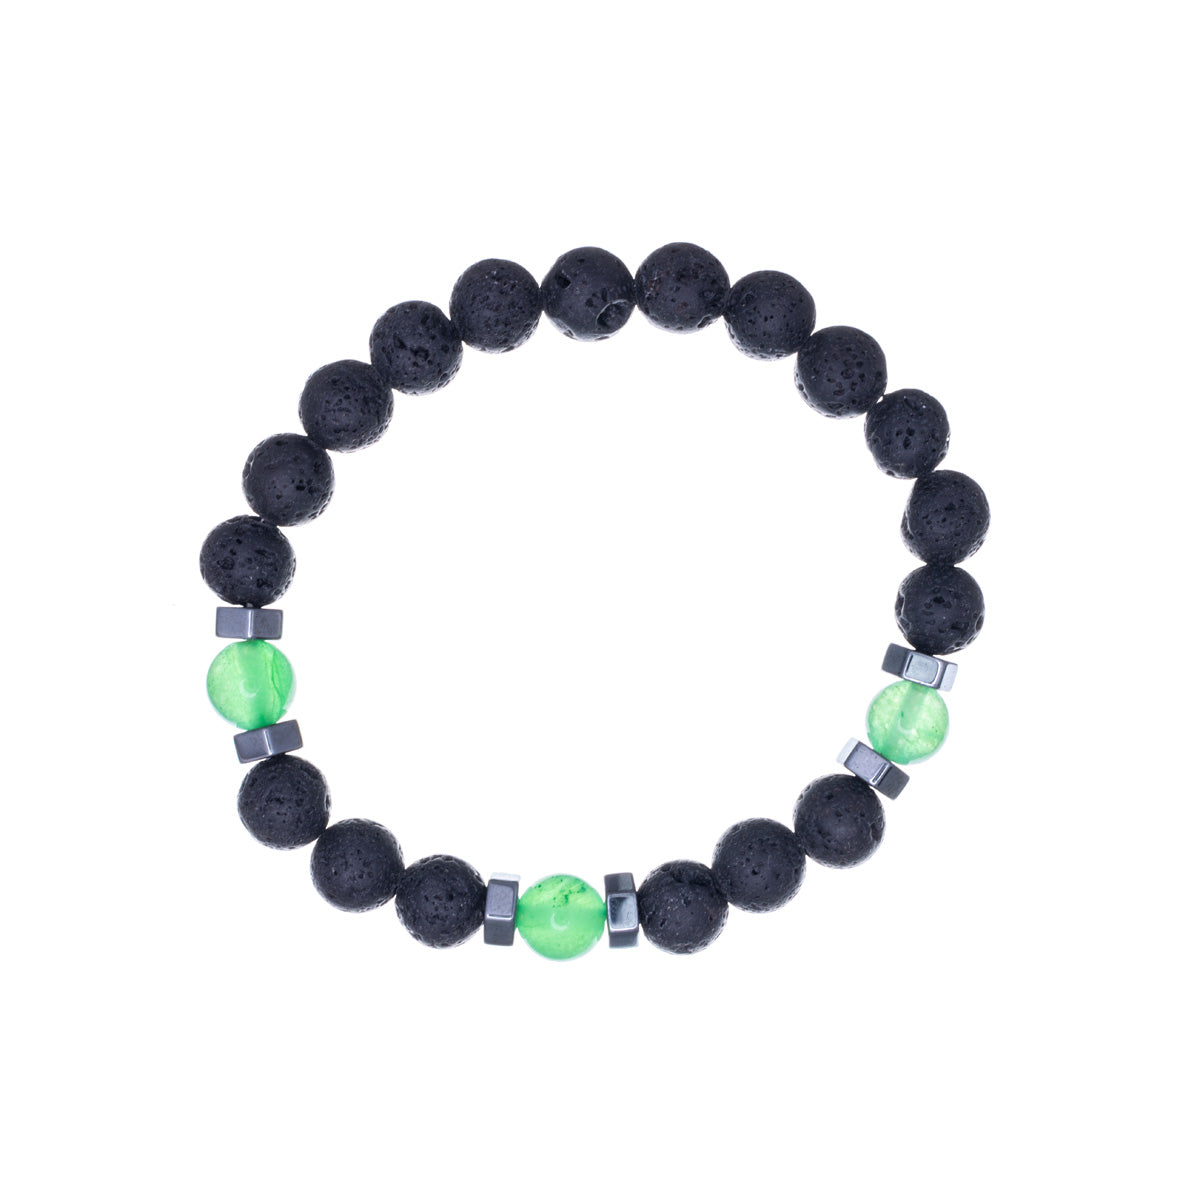 Elastic lava stone bracelet with glass beads